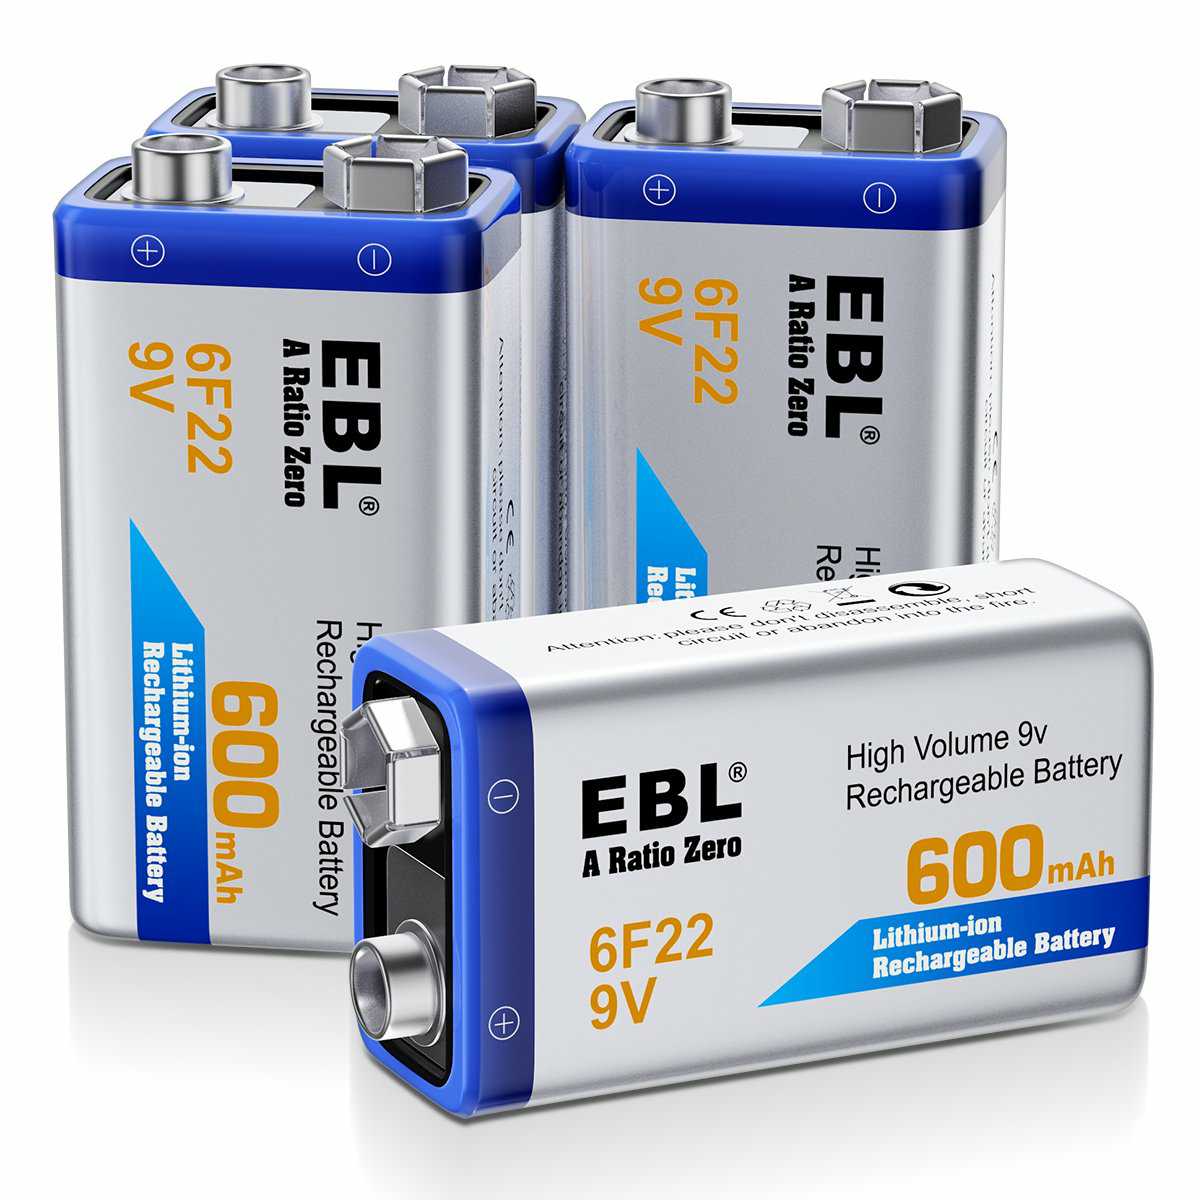 EBL 9V Li-ion Rechargeable Batteries 600mAh